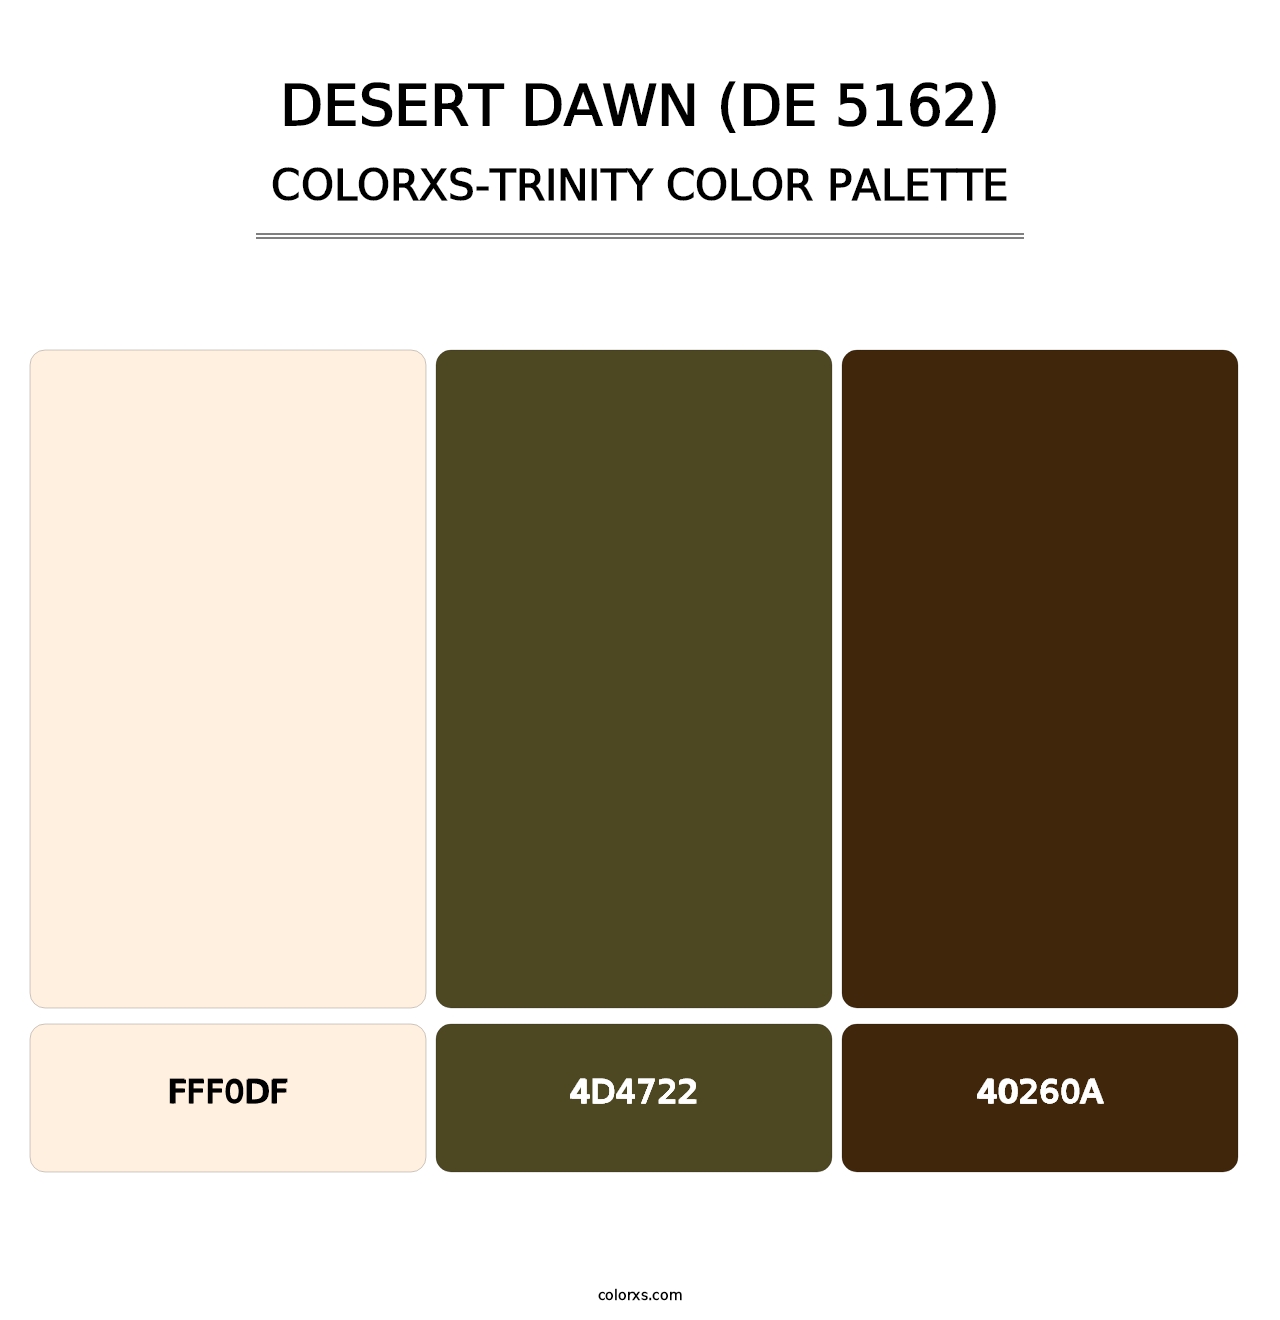 Desert Dawn (DE 5162) - Colorxs Trinity Palette